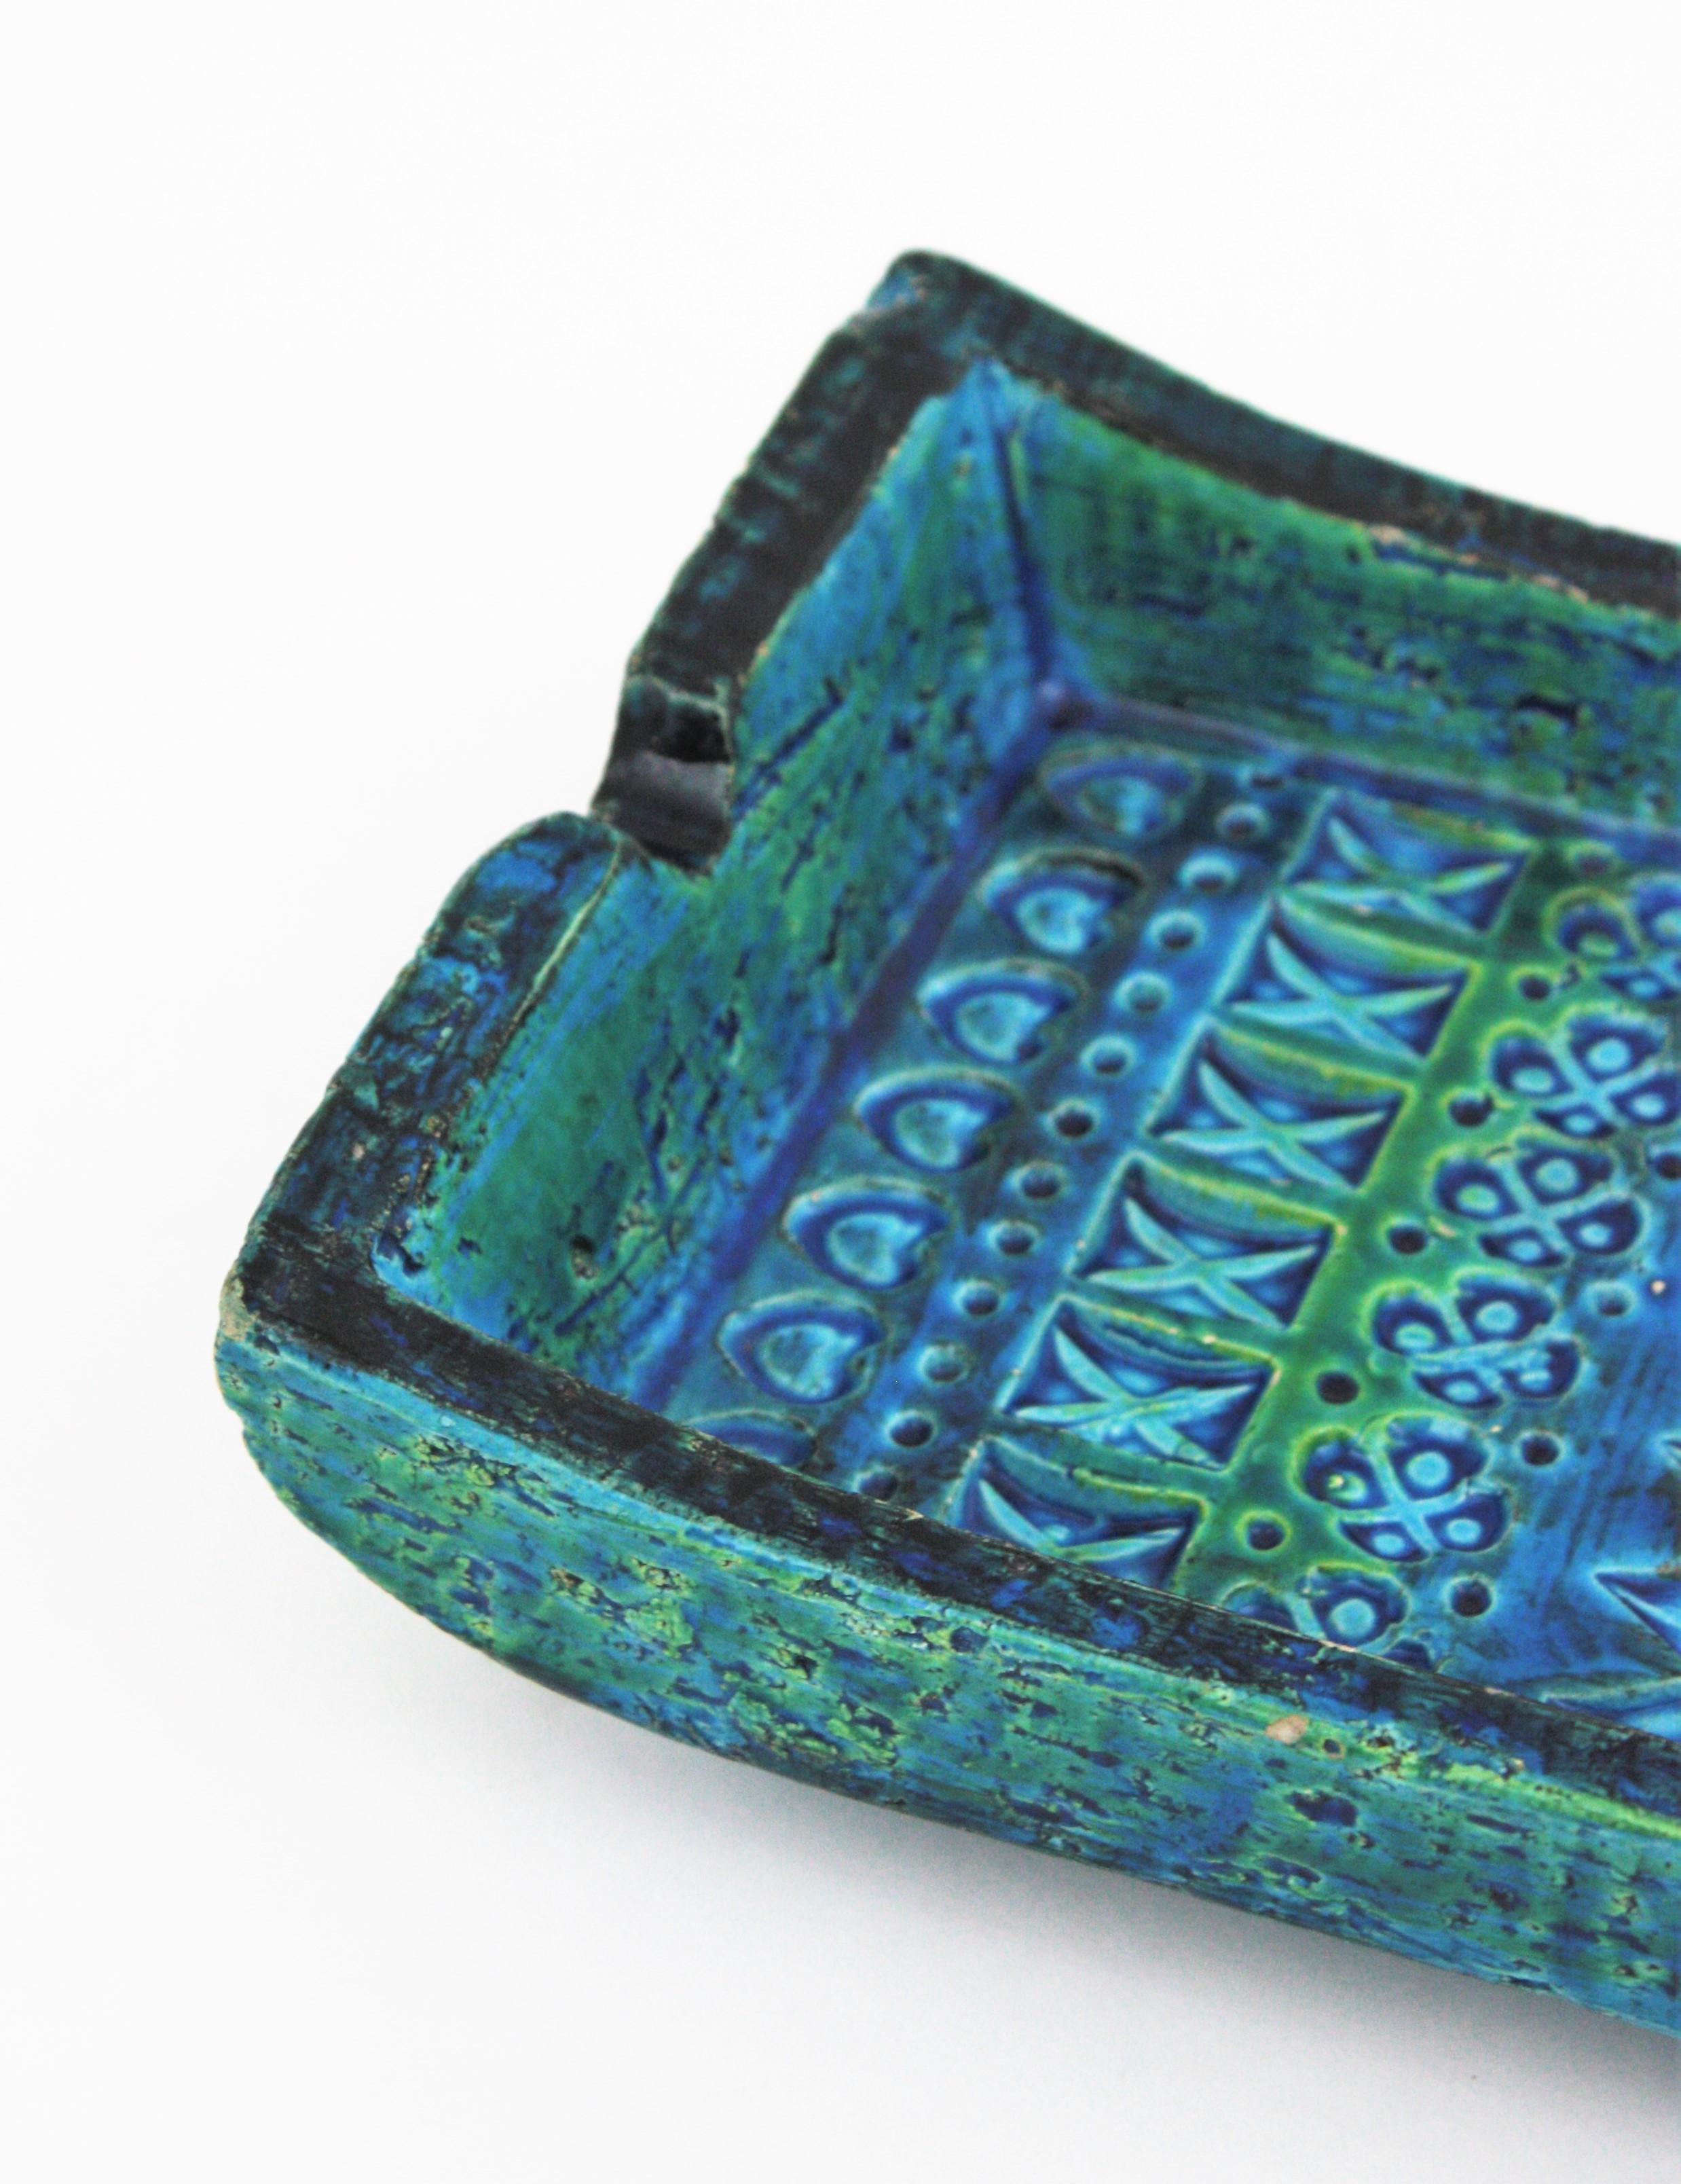 Aldo Londi Bitossi Rimini Blue Glazed Ceramic Rectangular Ashtray Bowl Videpoche For Sale 1